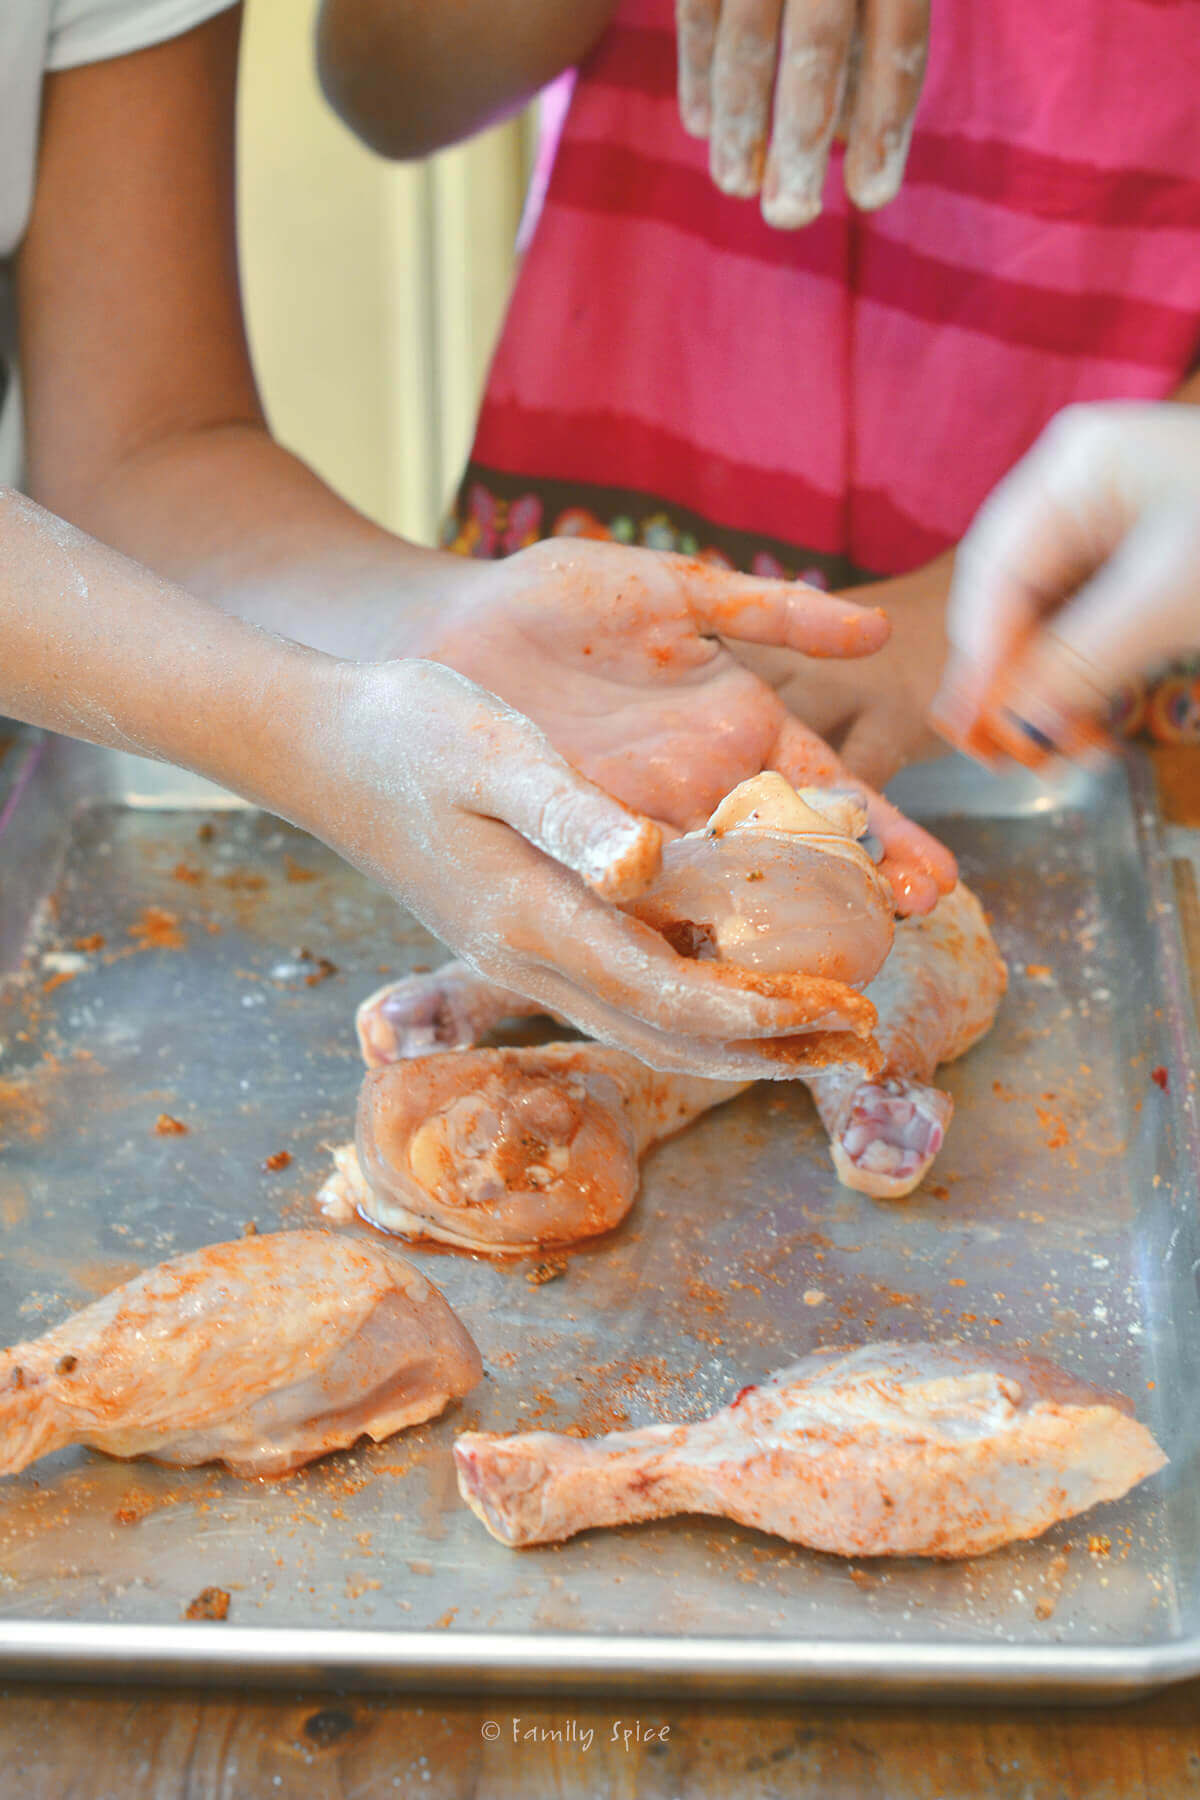 Kids seasoning chicken legs on a baking sheet